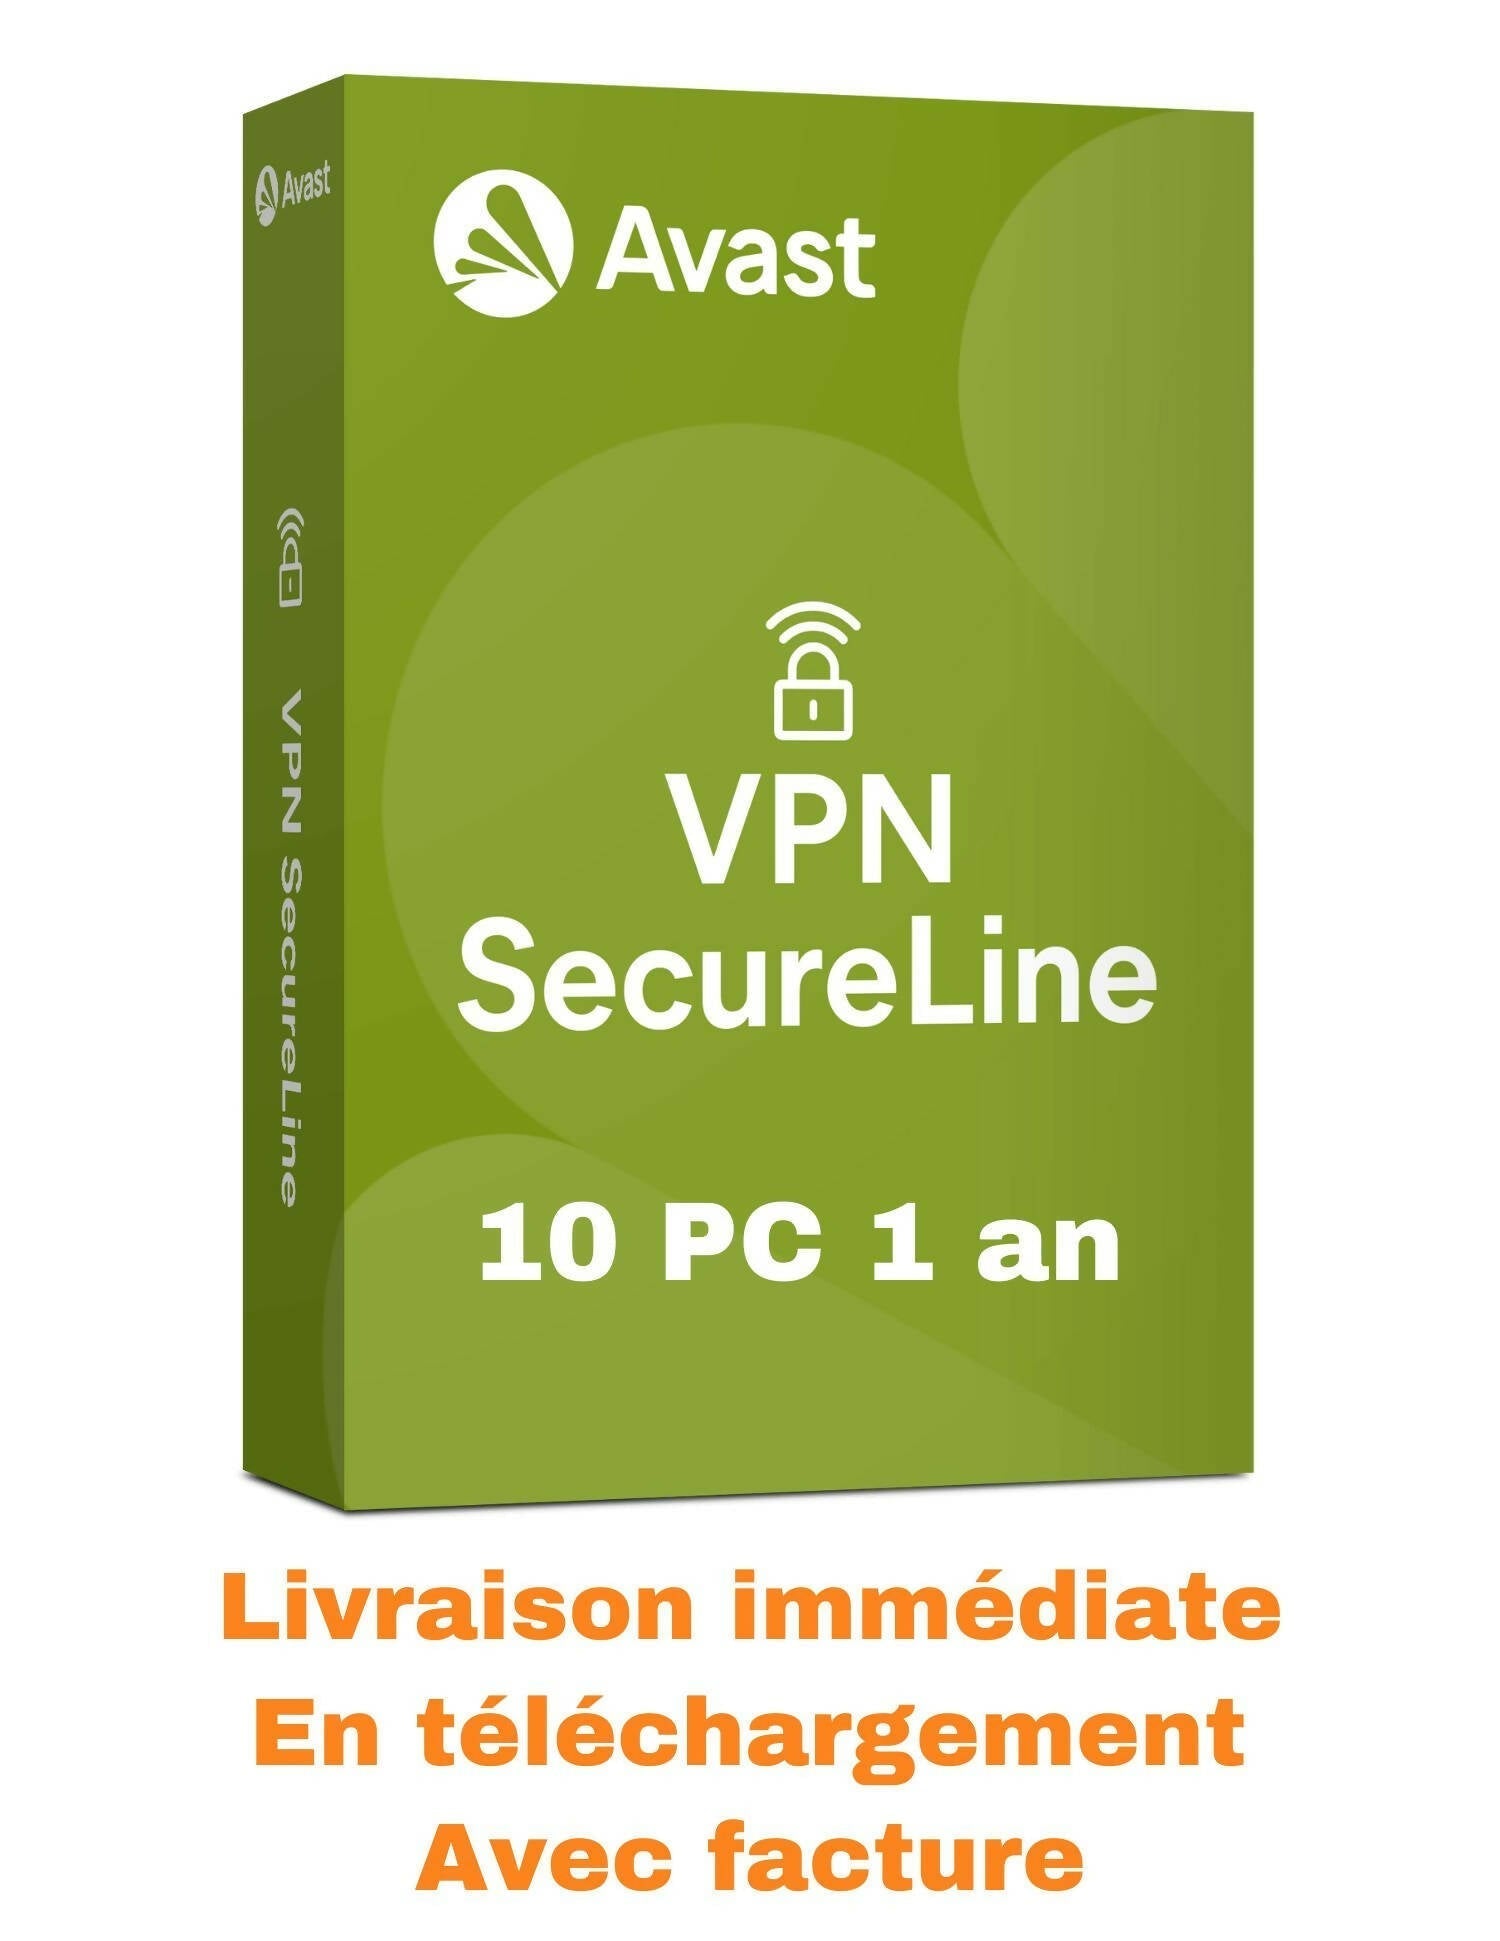 Avast Secureline VPN 10 appareils 1 an clicktofournisseur.com